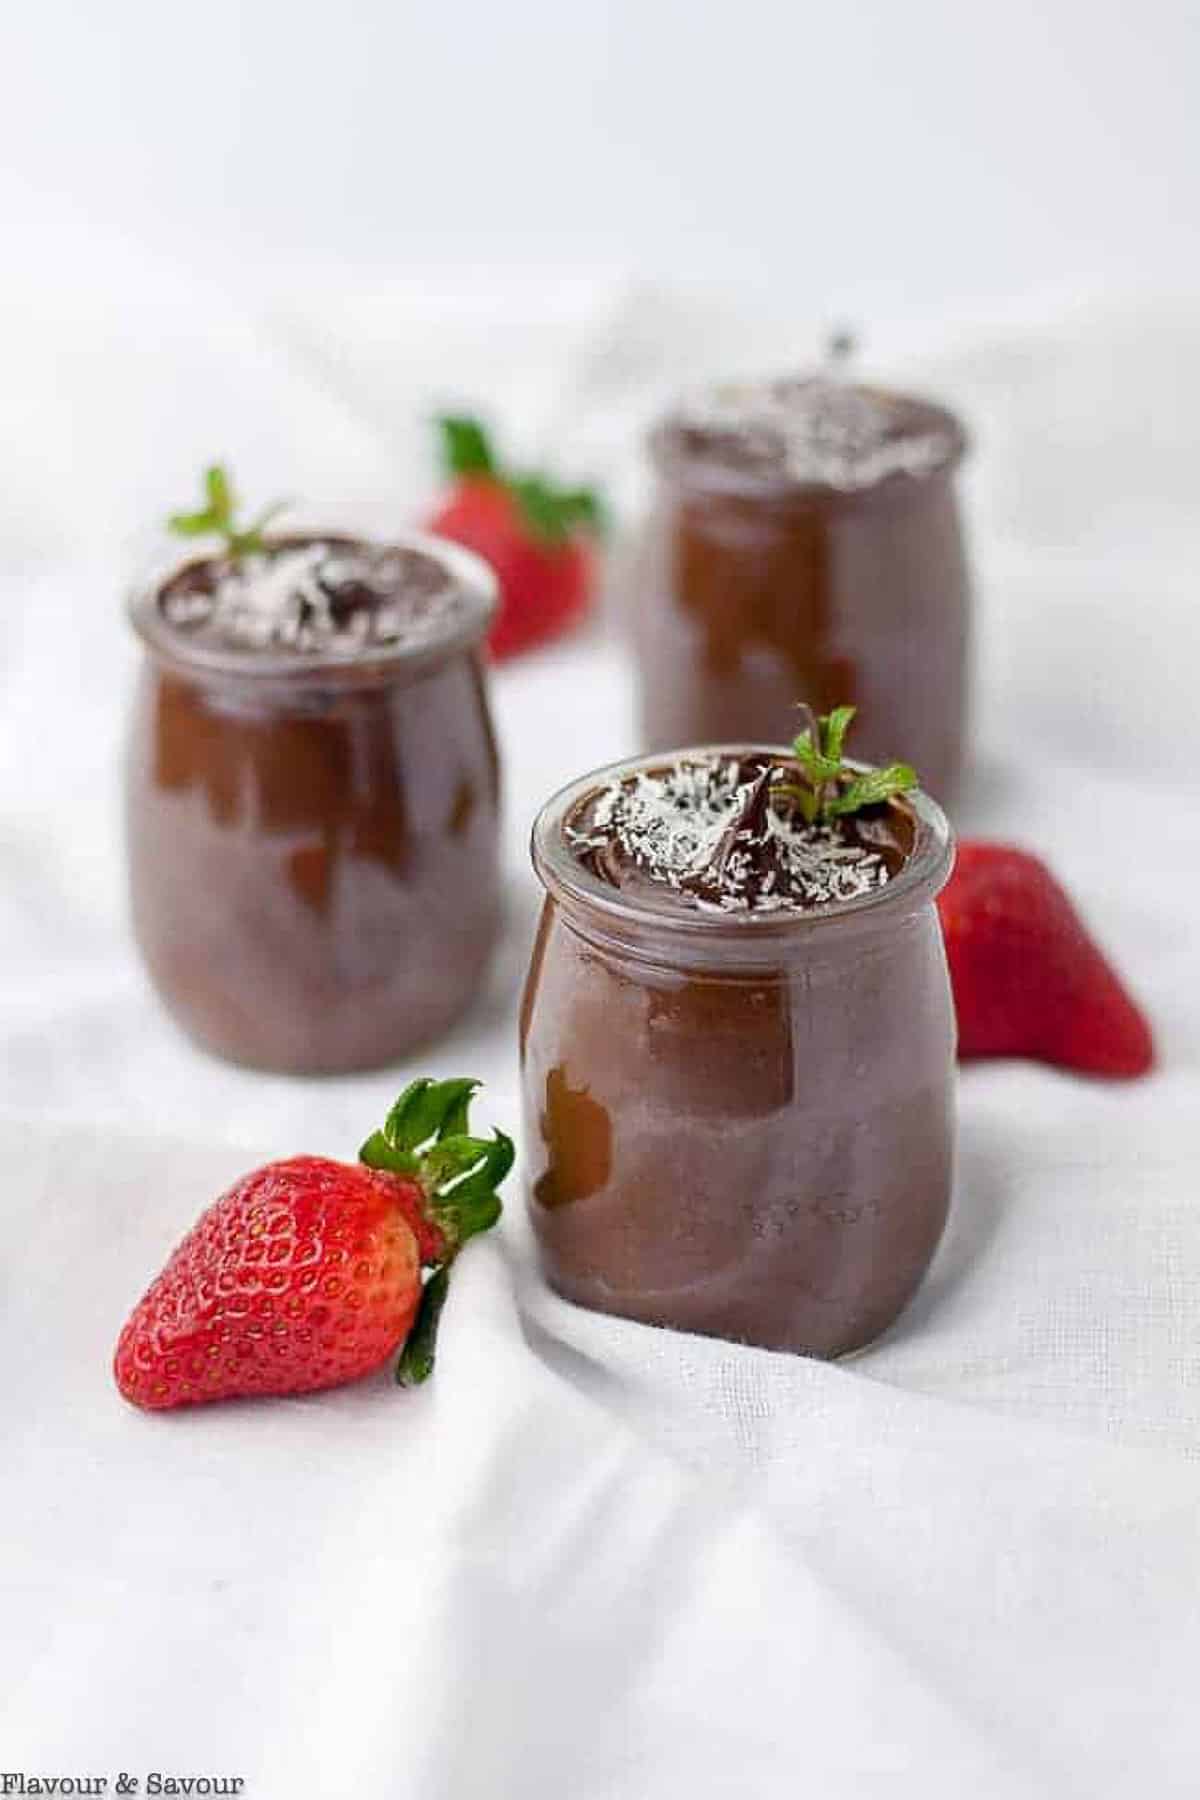 3 small dessert jars with vegan chocolate mousse.